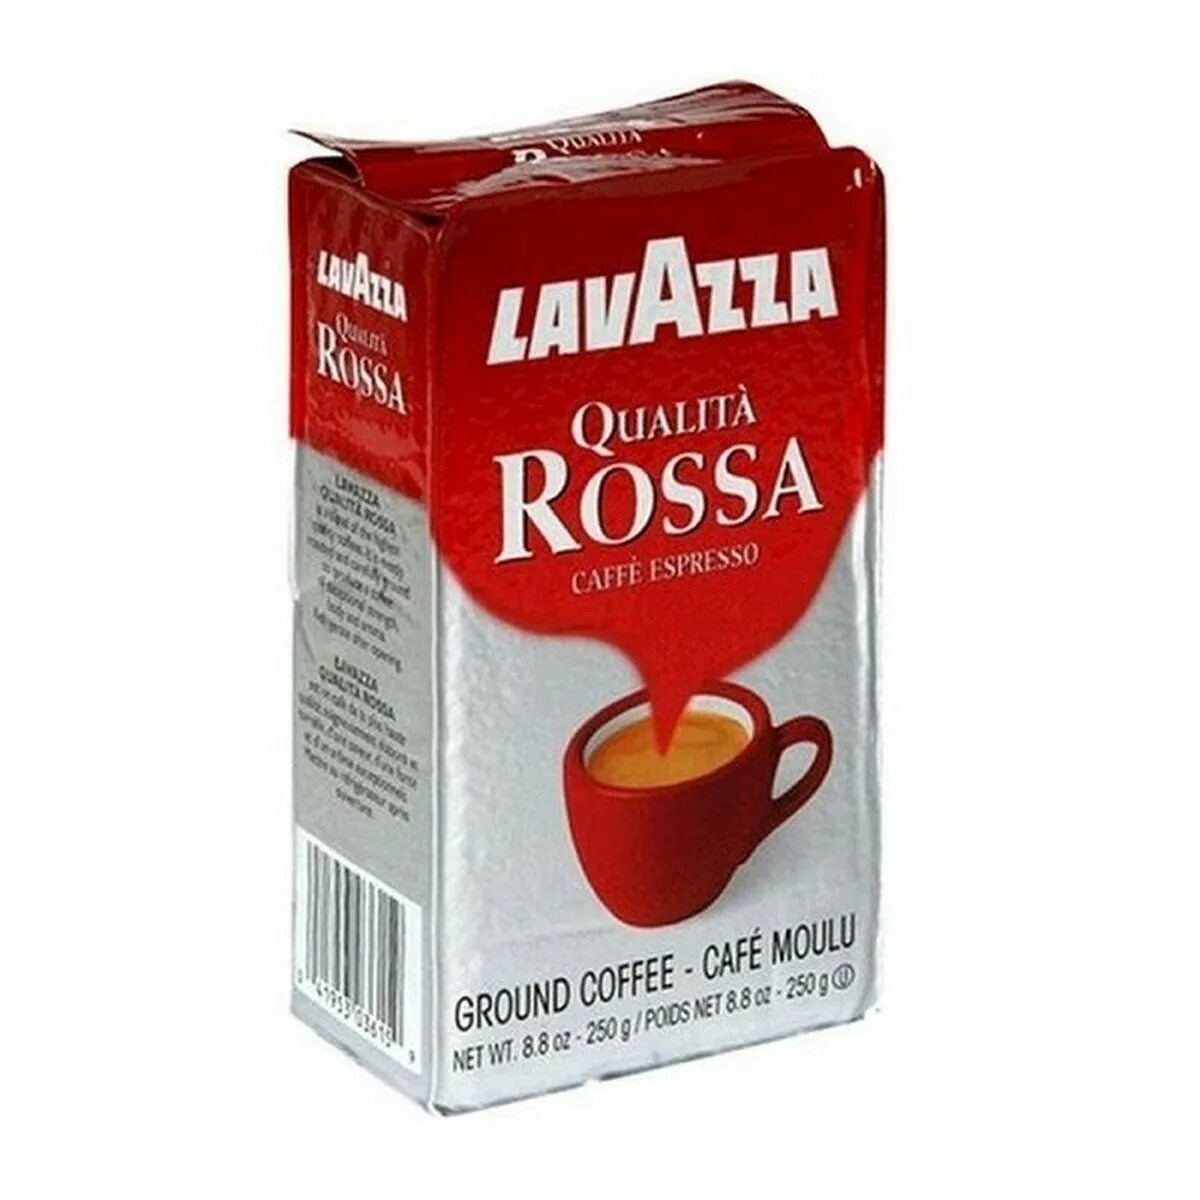 Кофе lavazza. Кофе молотый Lavazza qualita Rossa 250 гр. Lavazza Rossa 250 гр. Кофе Lavazza Rossa, молотый, 250 г. Лавацца Росса молотый 250 гр..